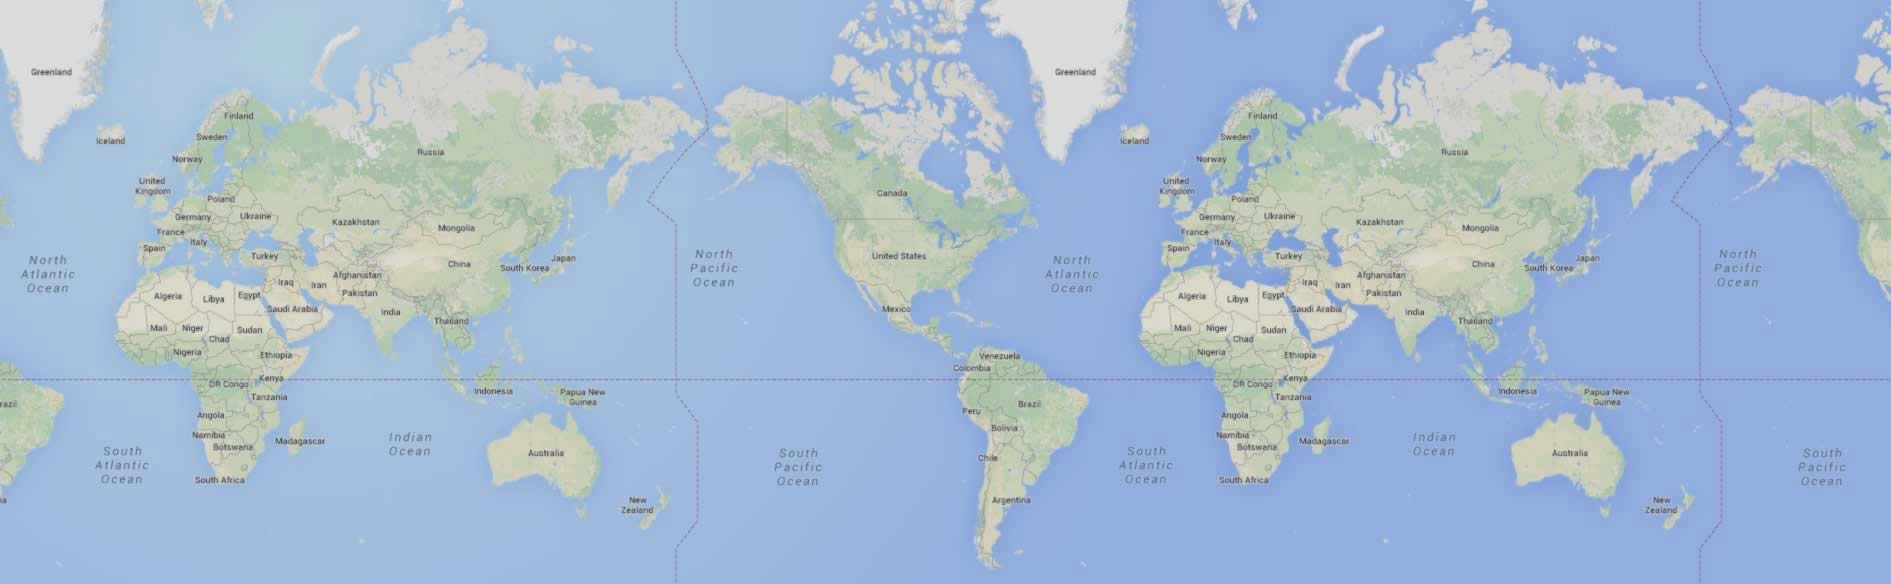 map-of-the-world-darkerjpg